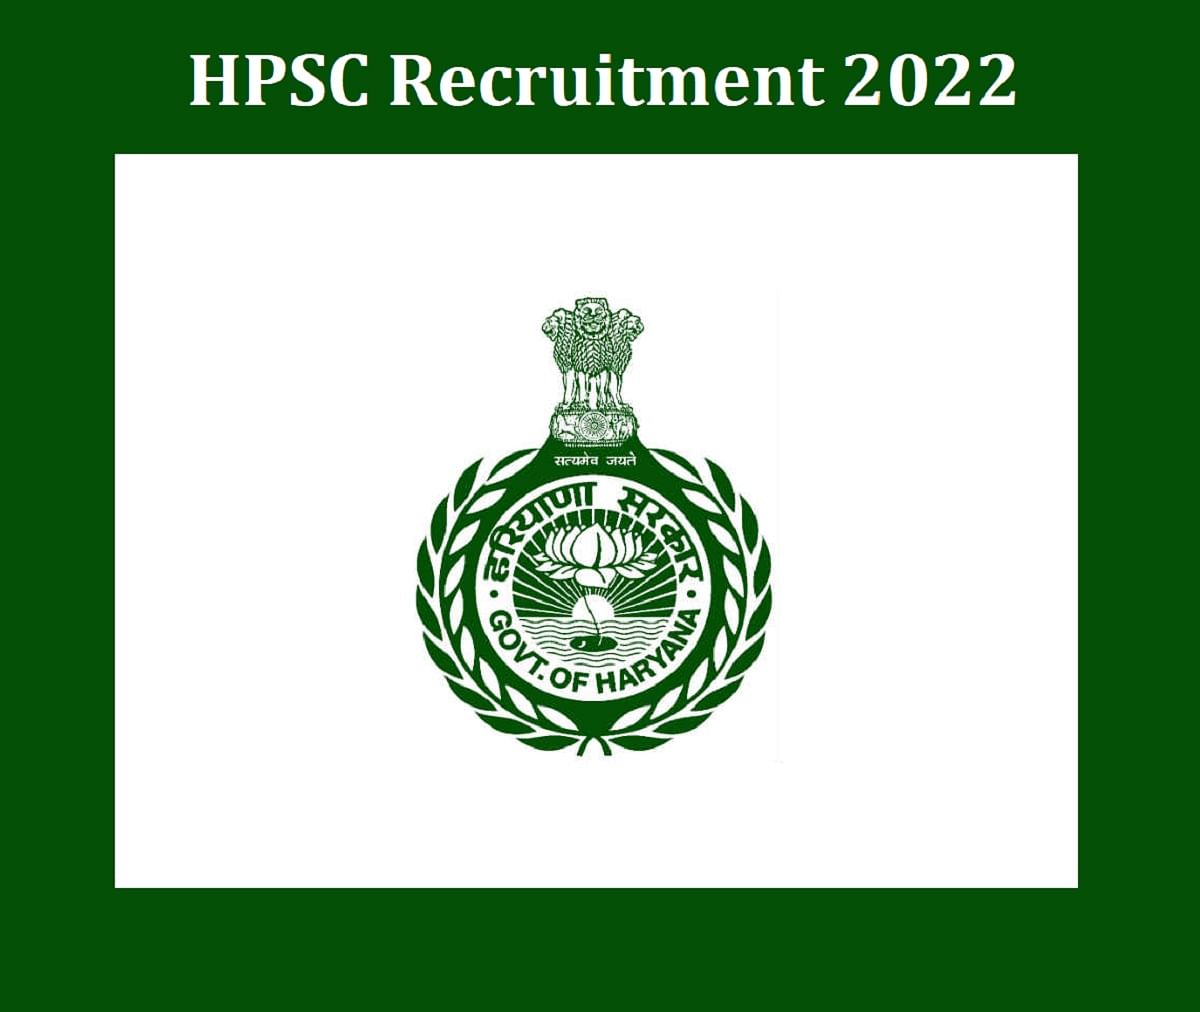 HPSC Recruitment 2022: Applications Invited for Senior Medical Officer Posts, Details Here